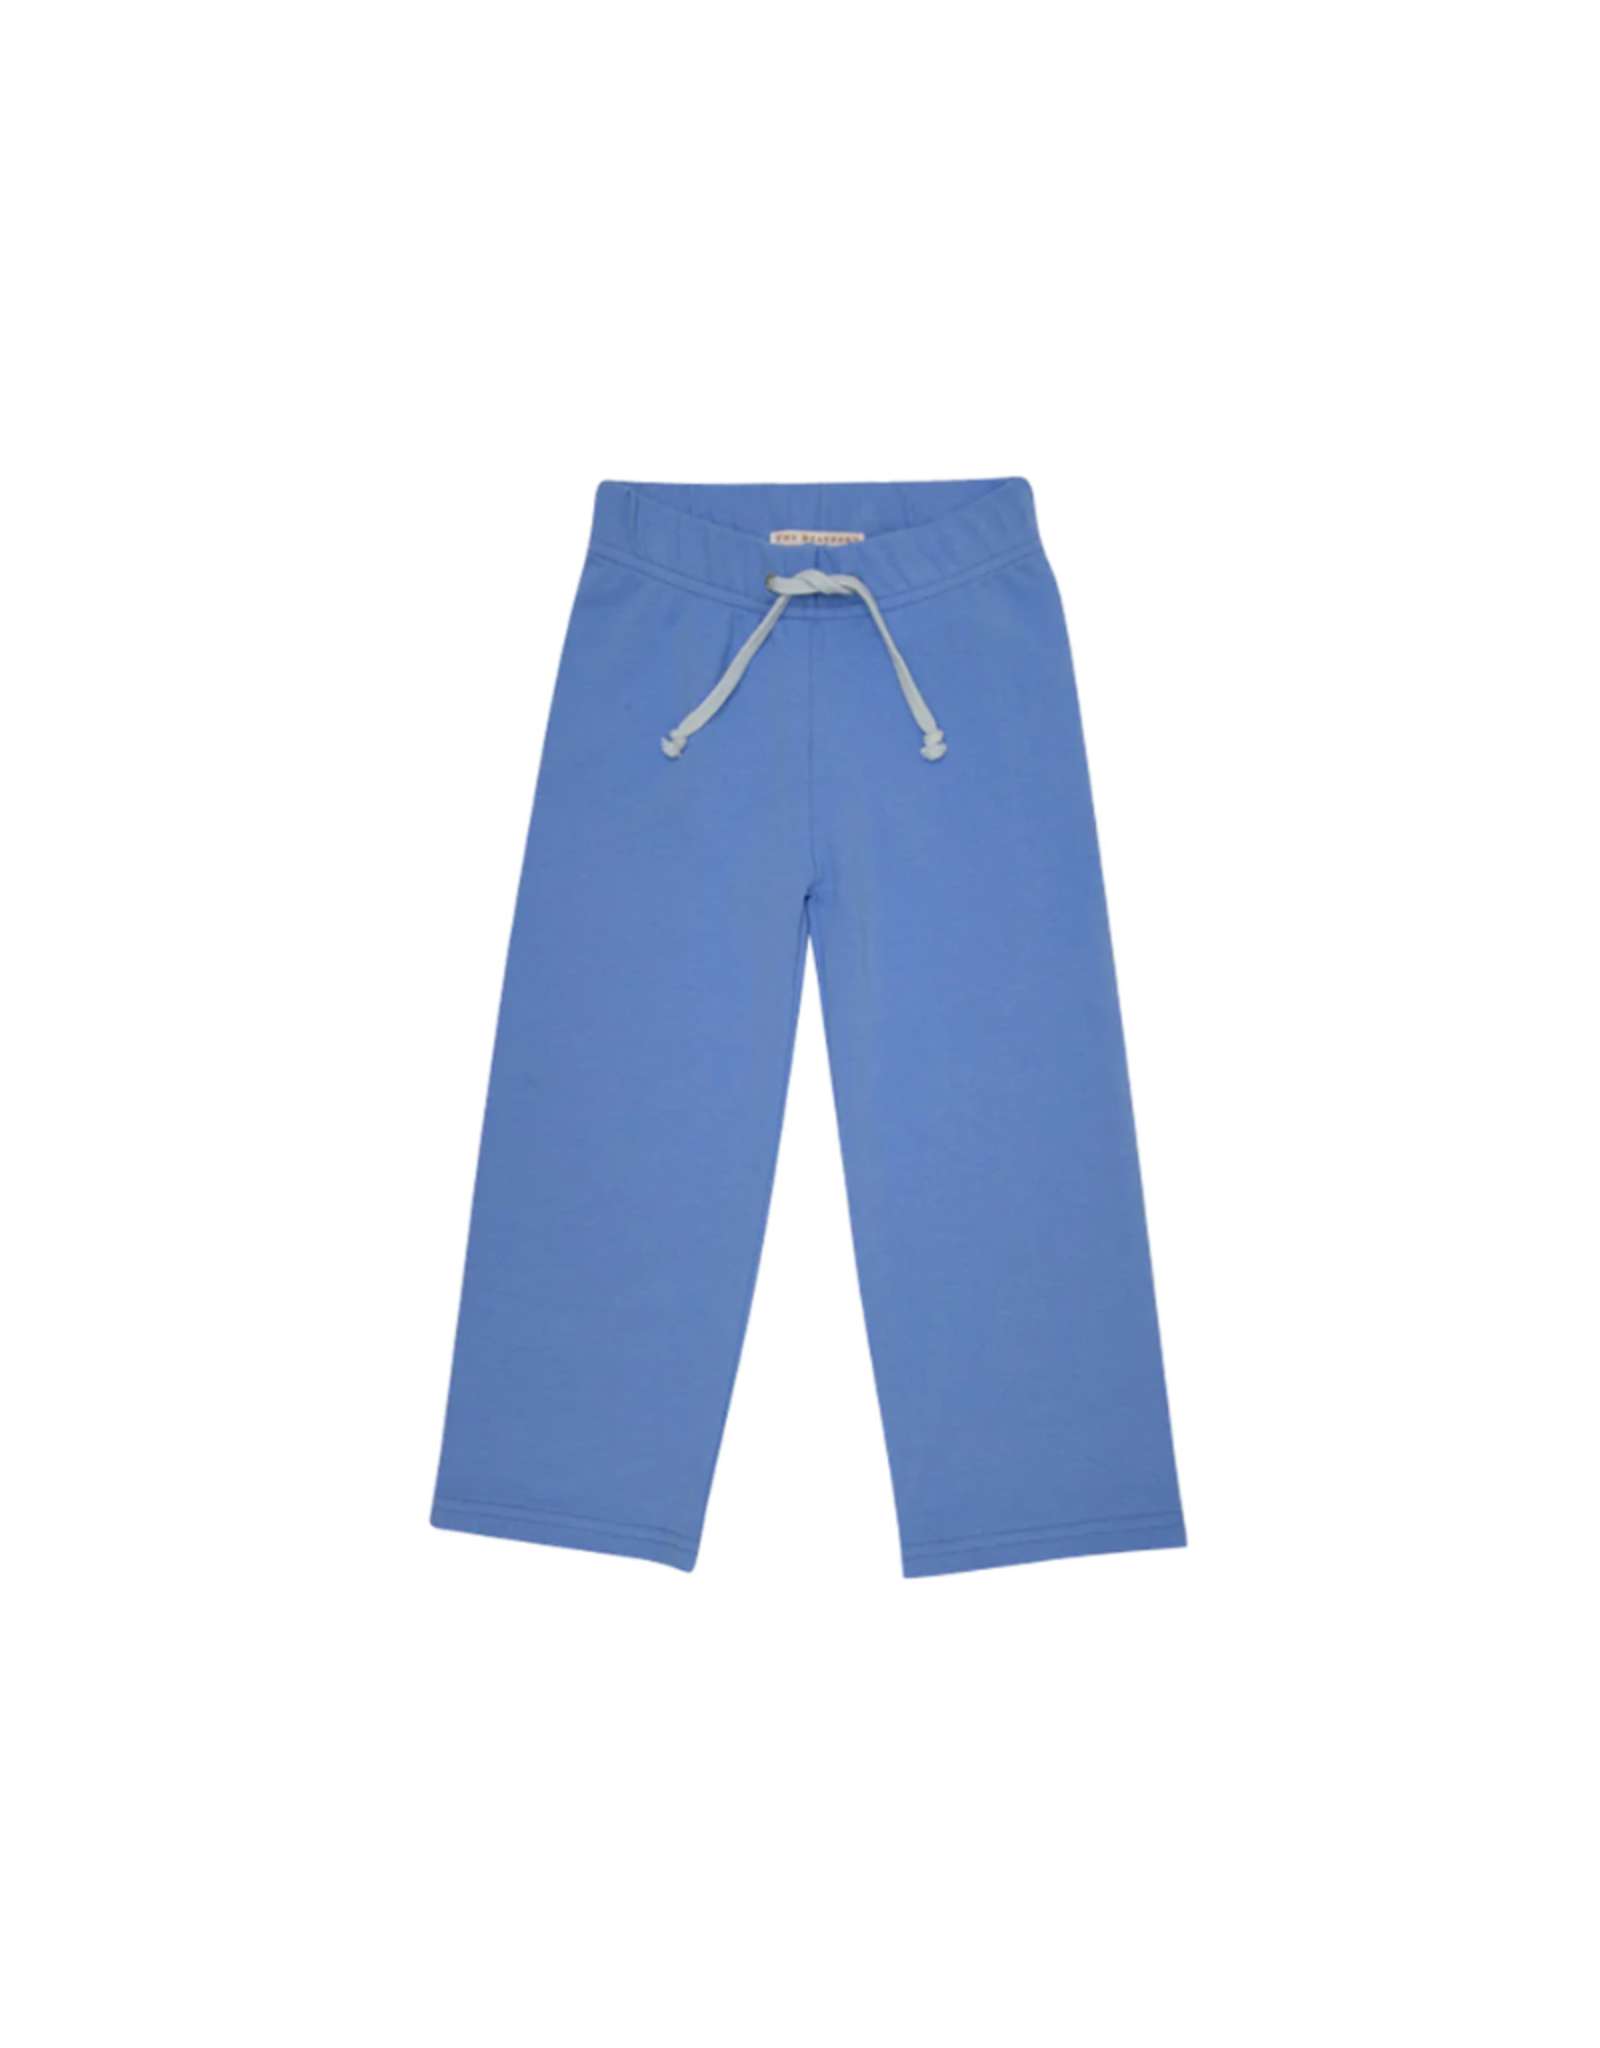 The Beaufort Bonnet Company Sunday Style Sweatpants, Grantley Grey